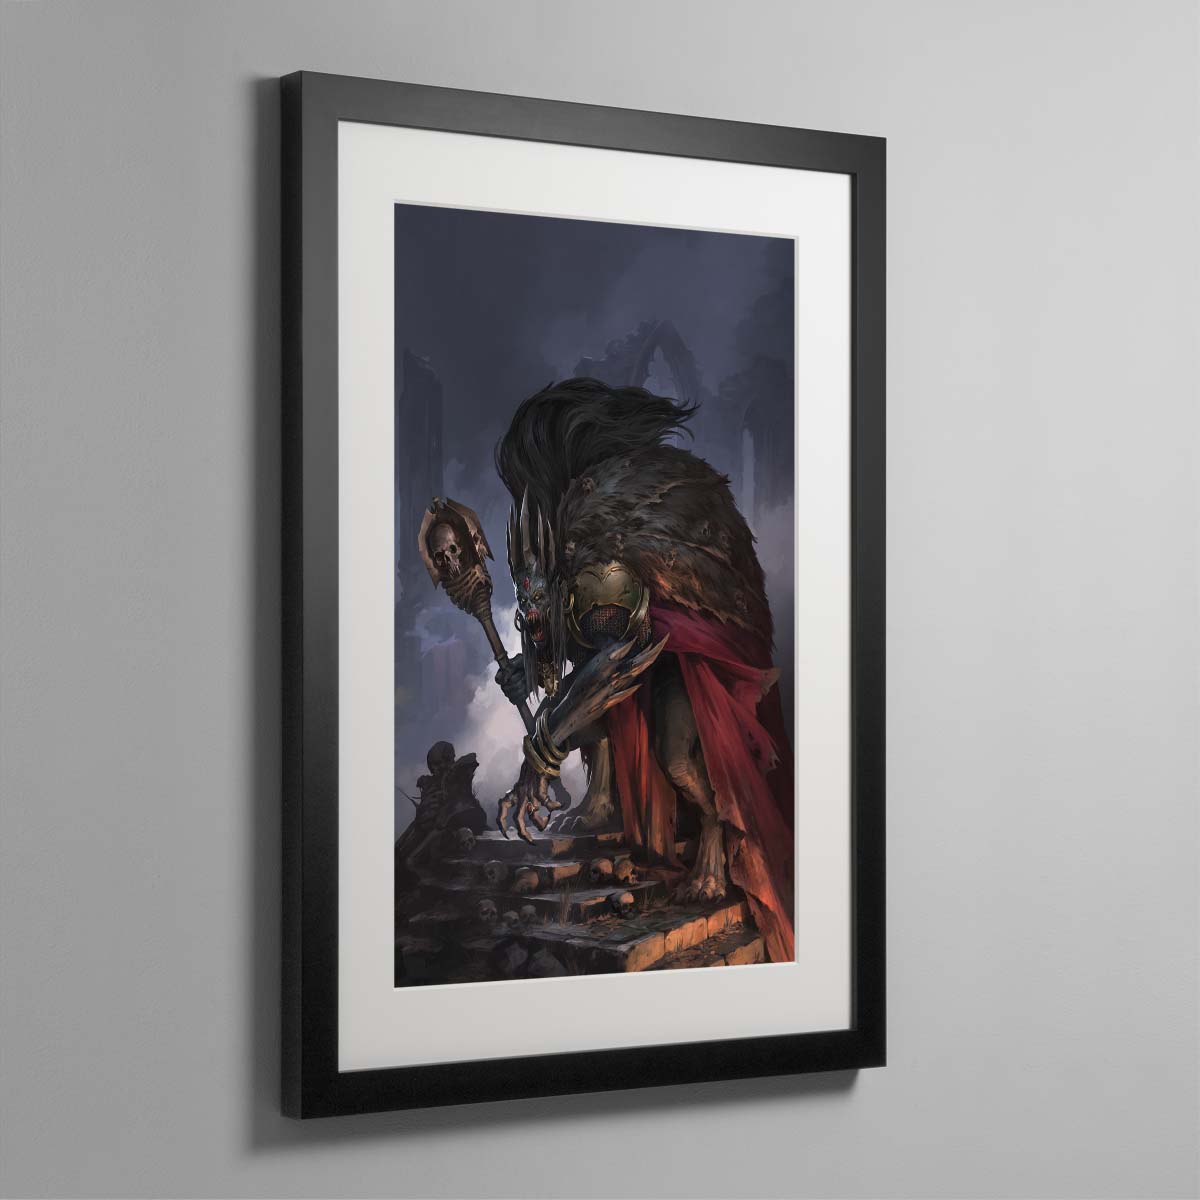 Ushoran, the Mad King – Framed Print